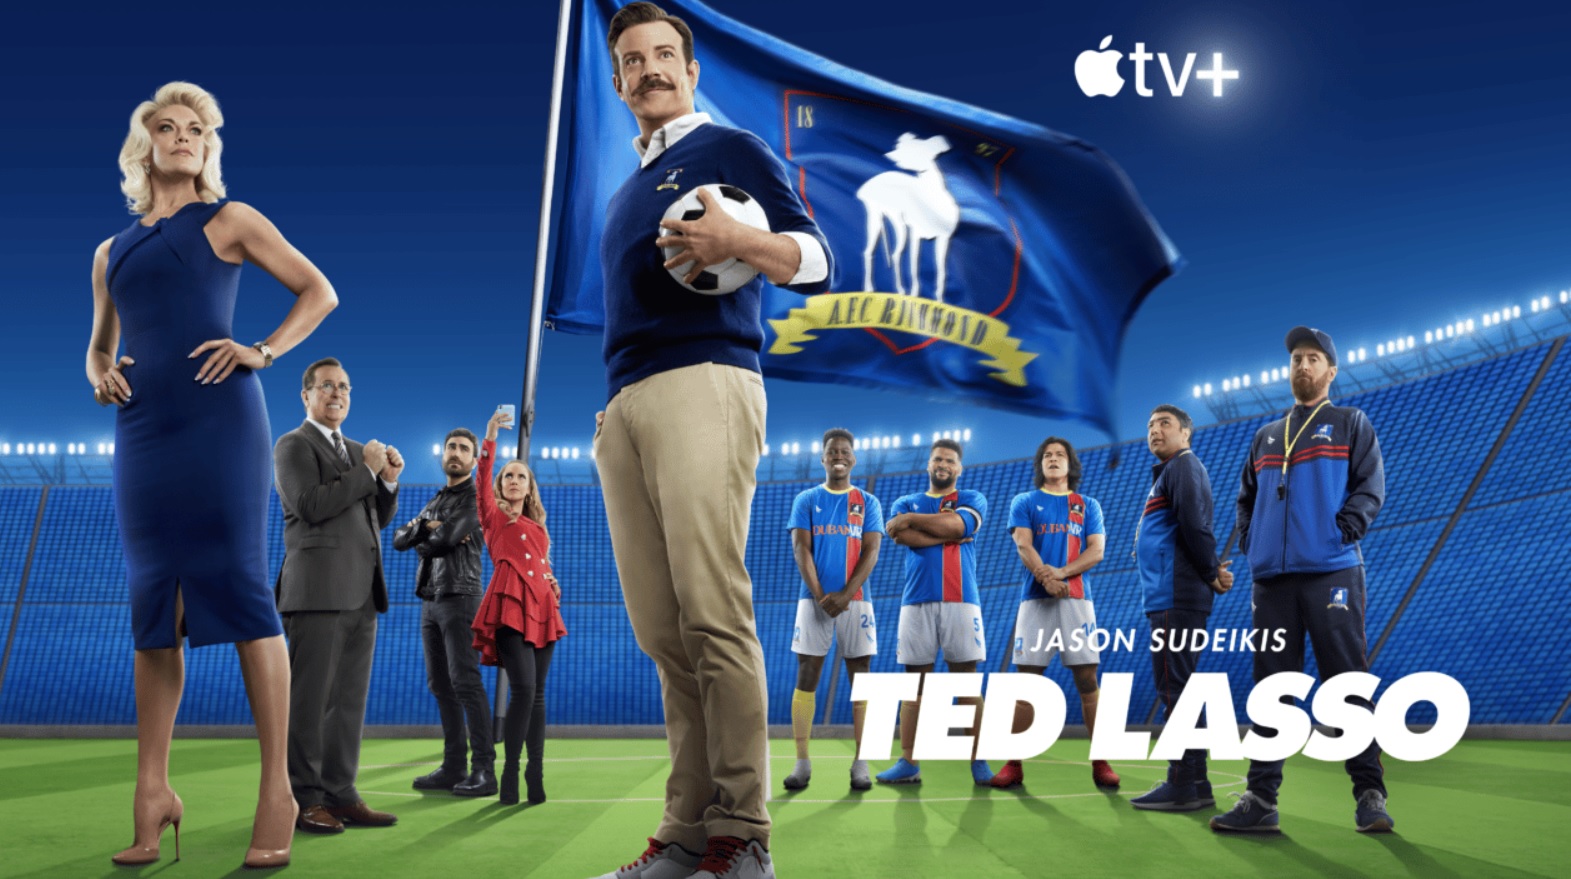 Ted Lasso serie Apple TV+